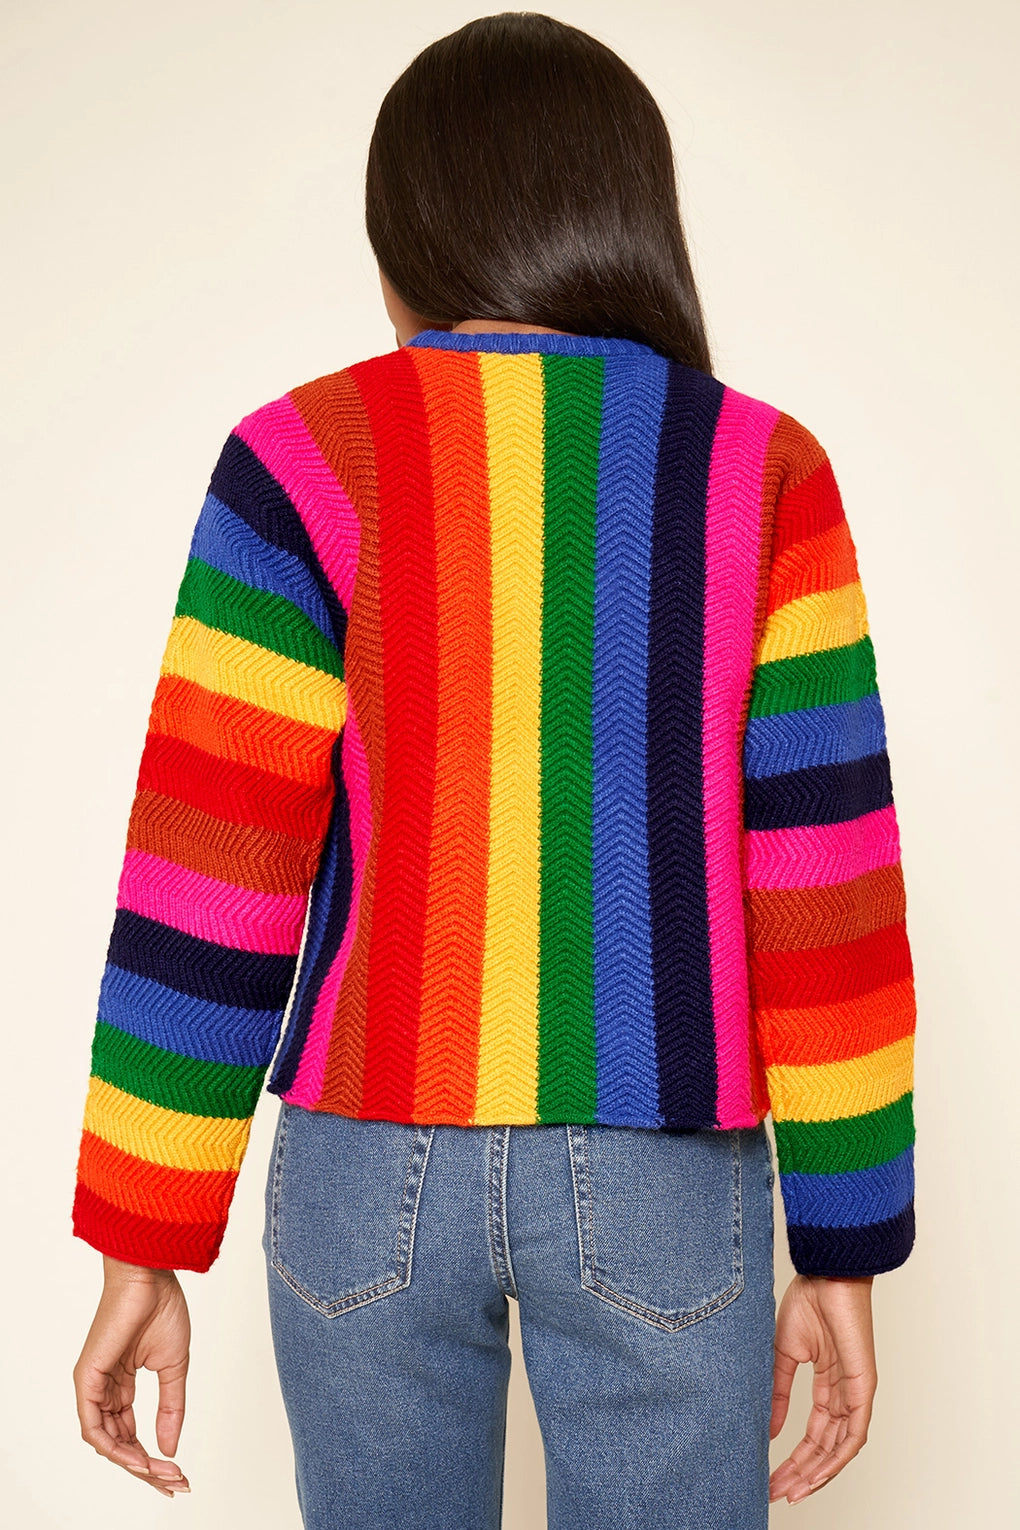 Sesame Street Sweater